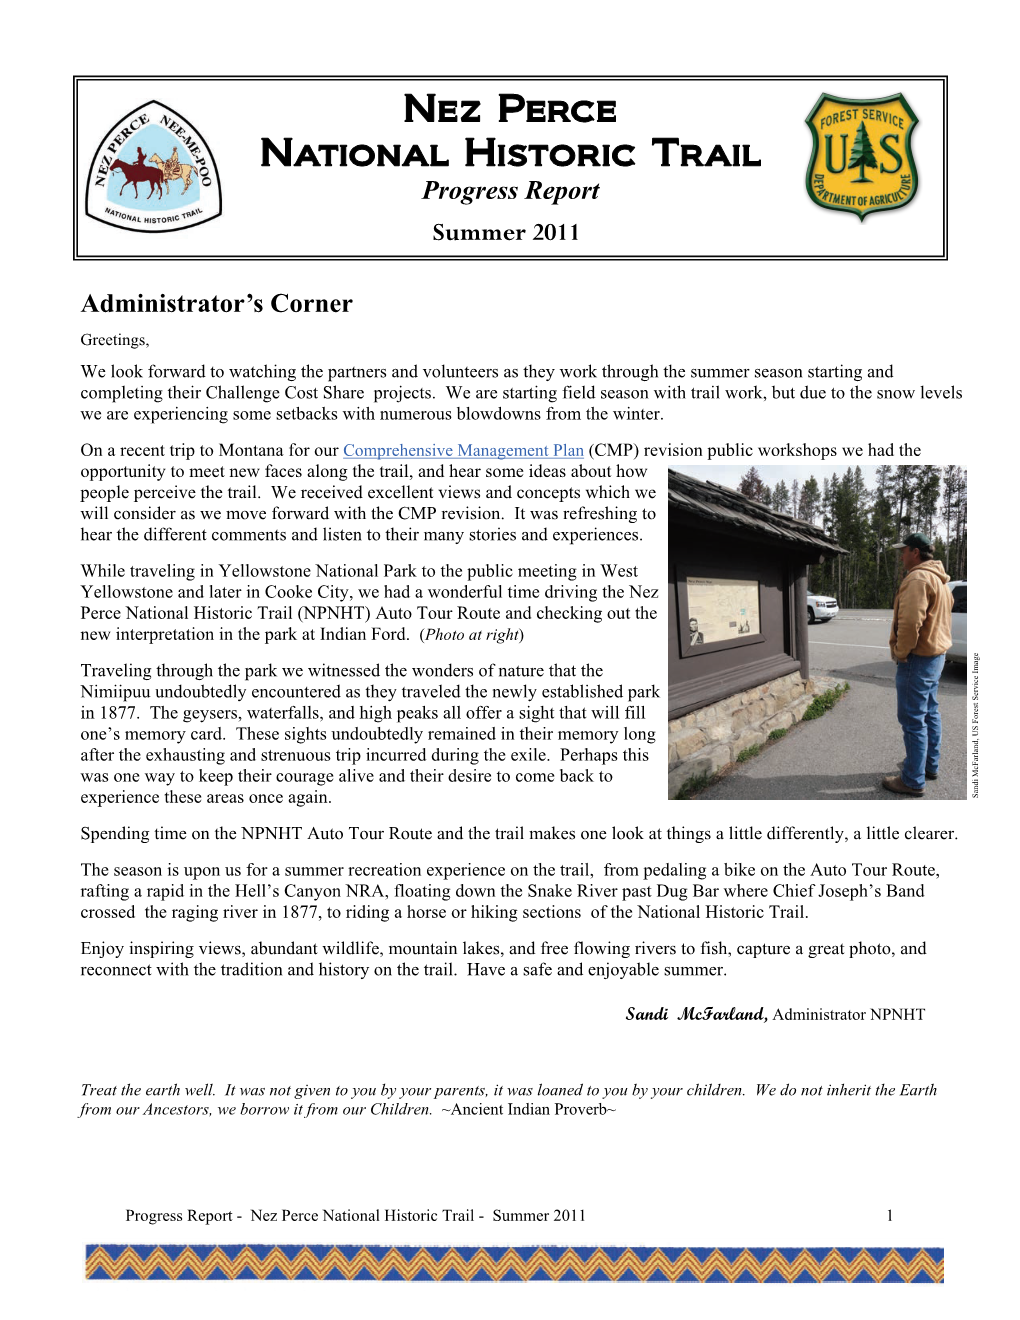 Nez Perce National Historic Trail Progress Report Summer 2011